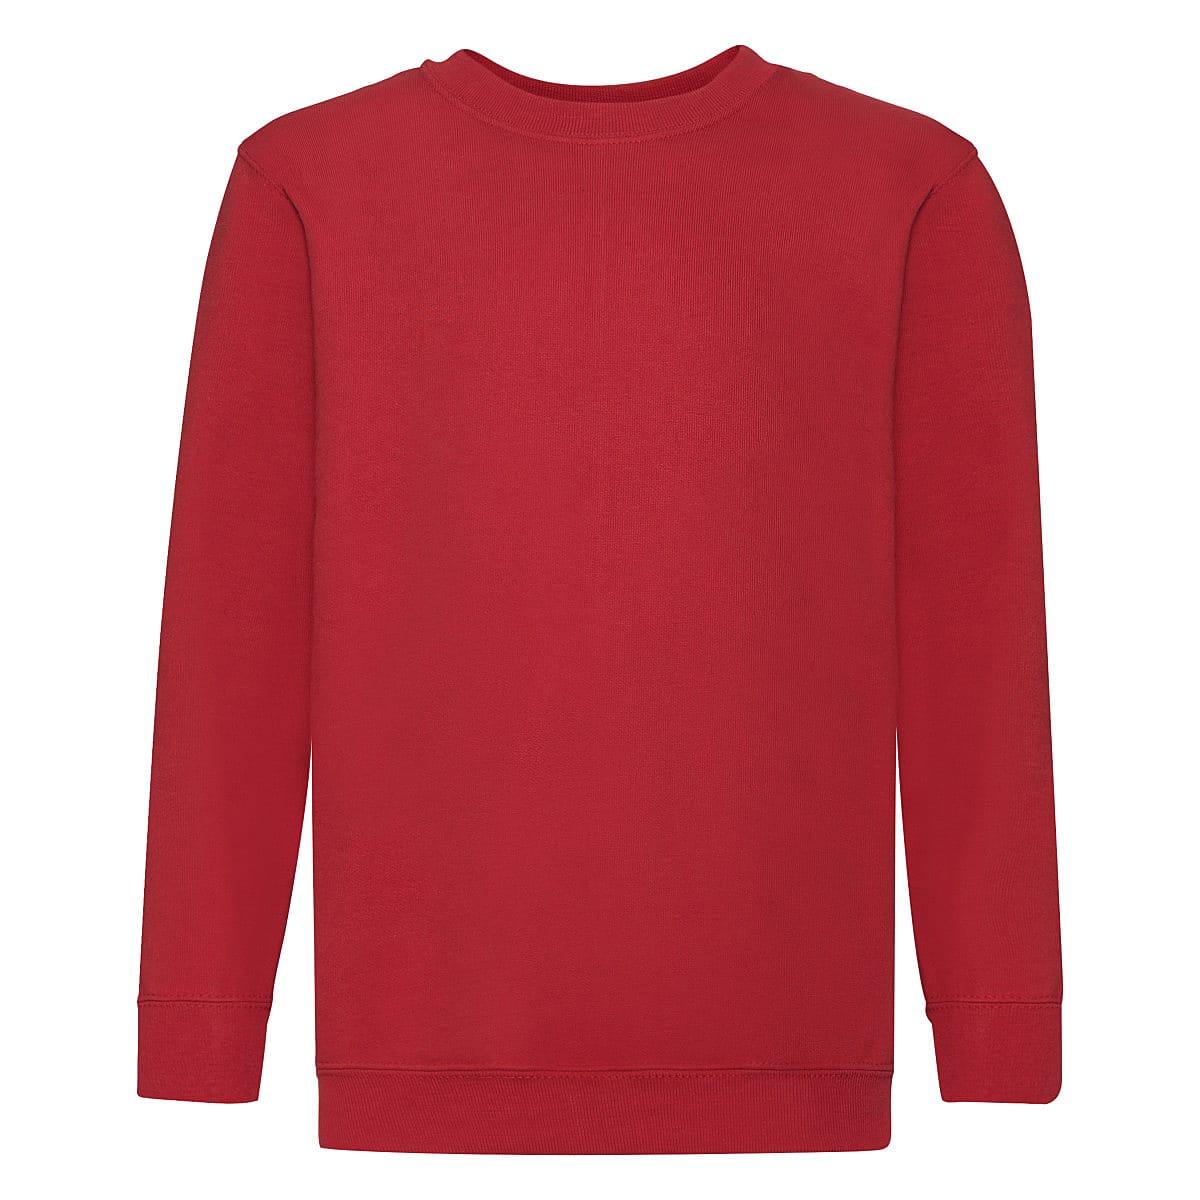 Fruit Of The Loom Childrens Set in Sleeve Sweatshirt in Red (Product Code: 62041)